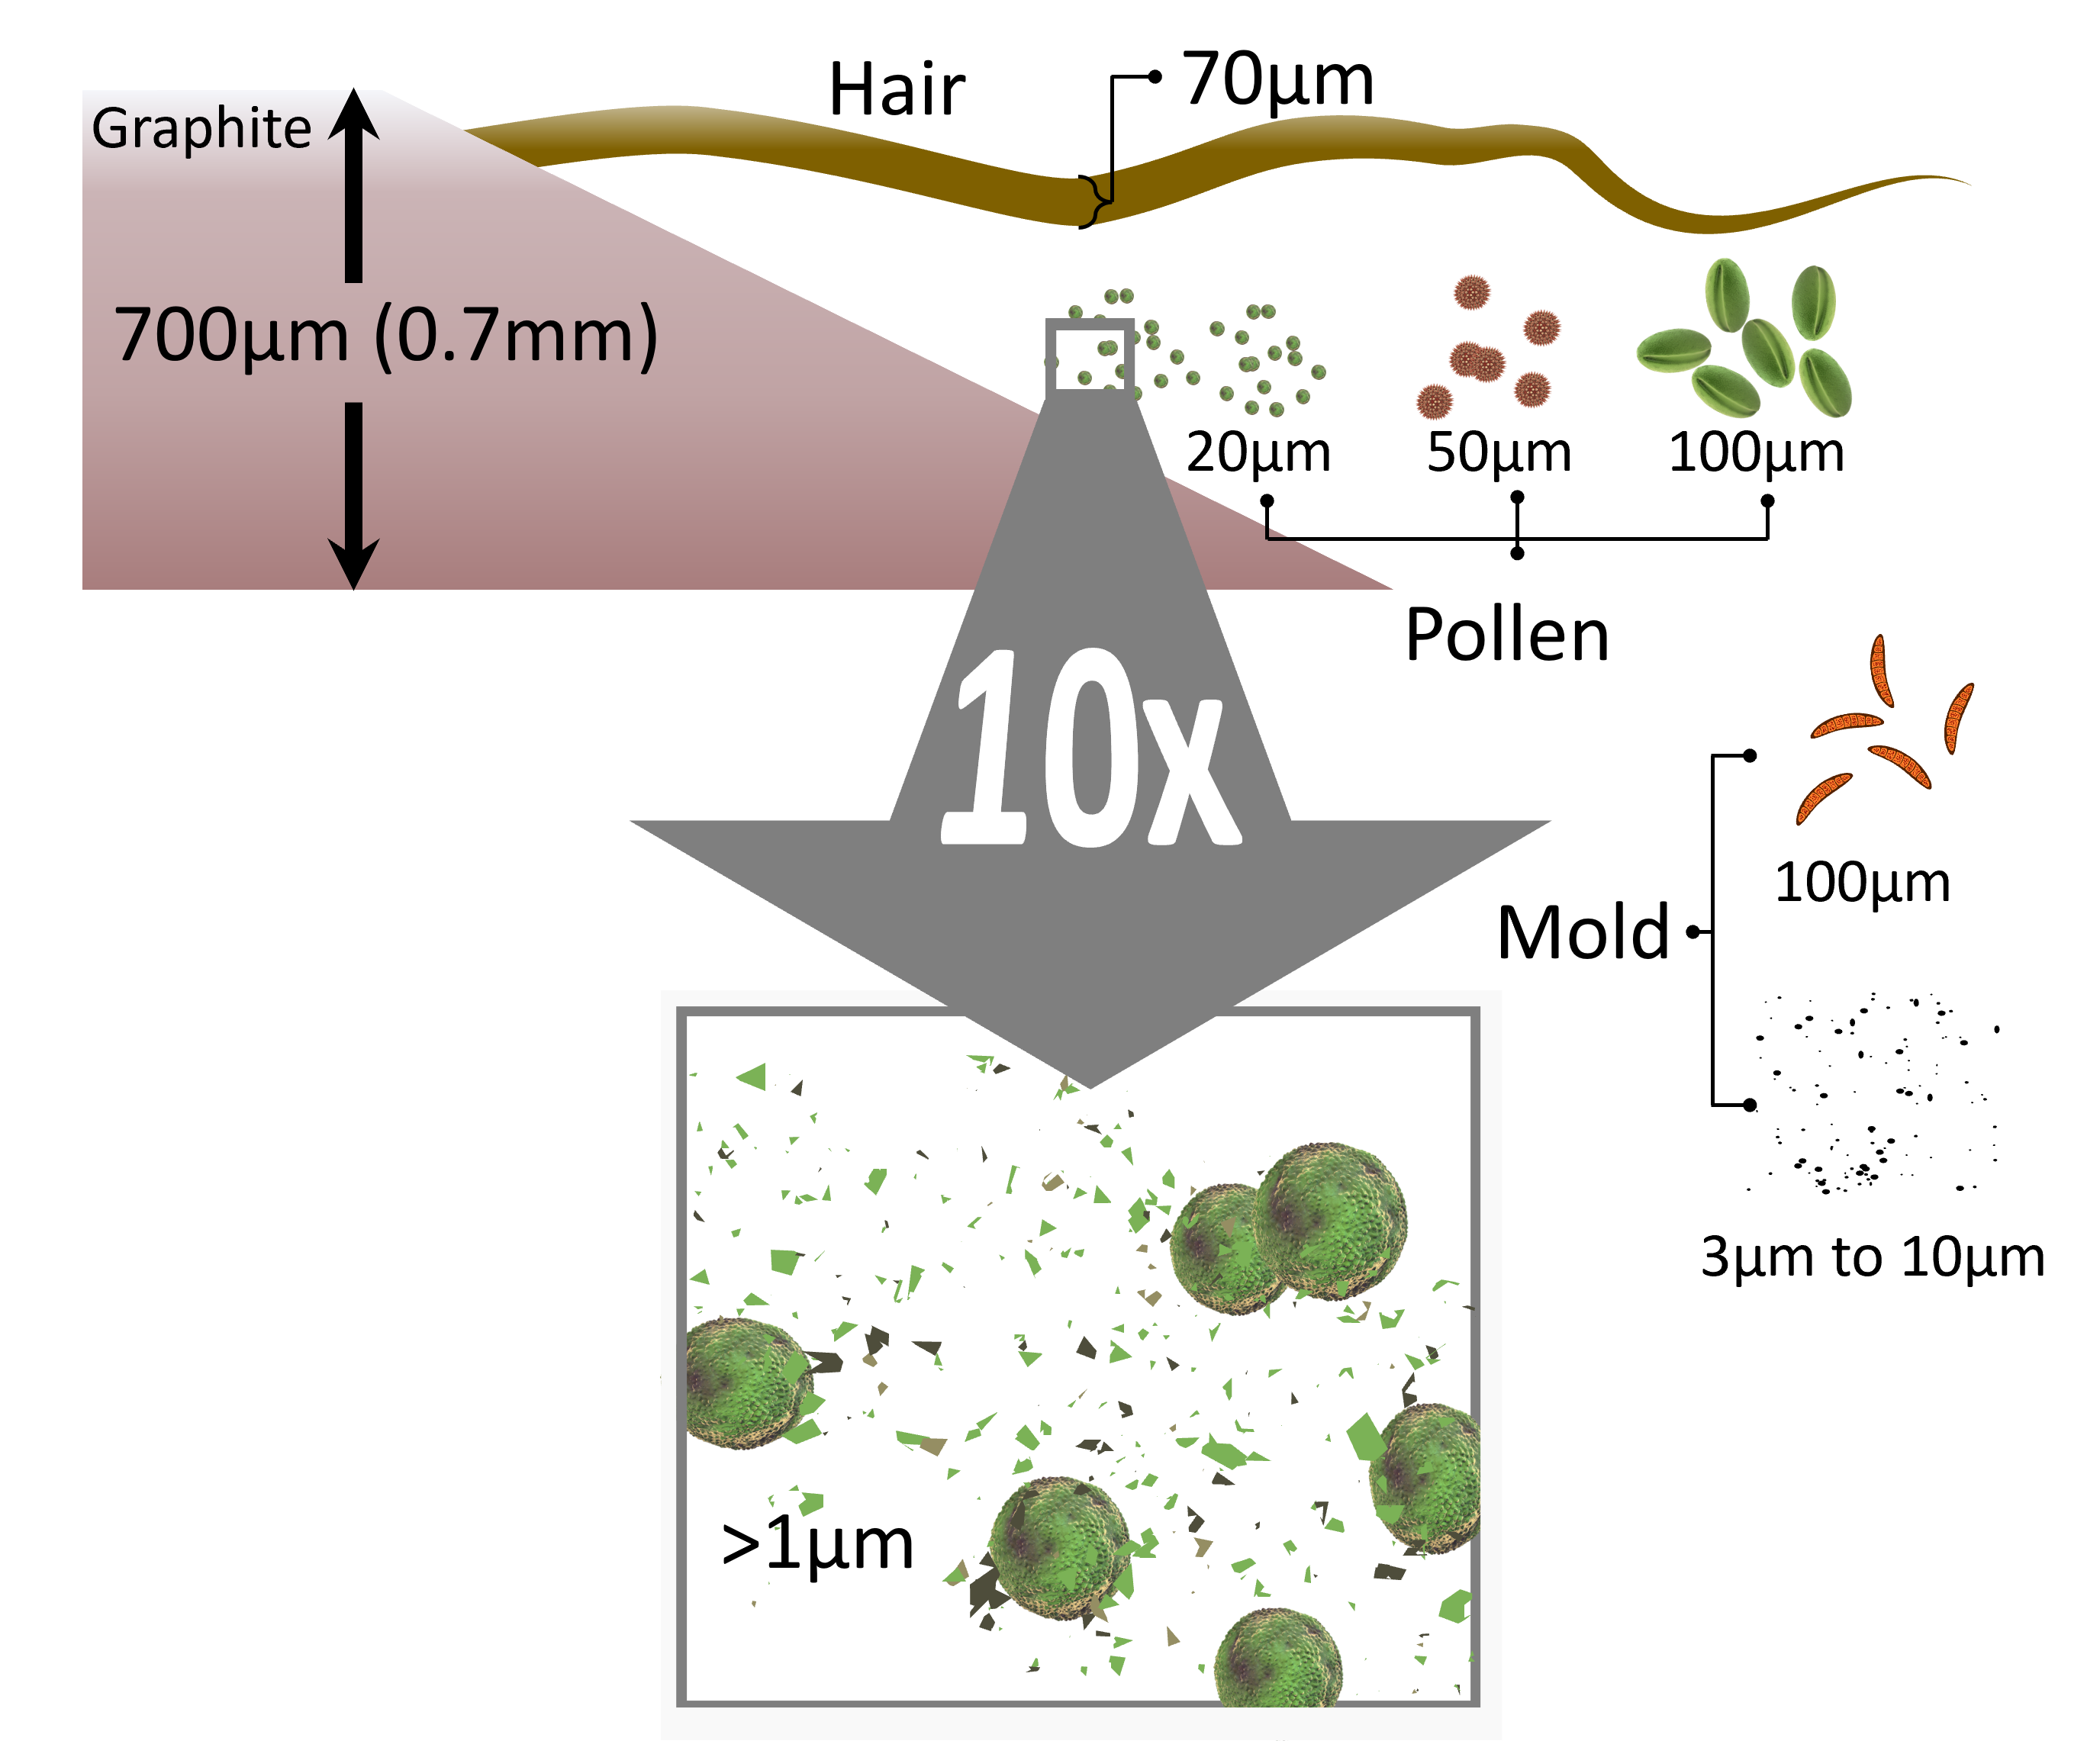 Relative size of pollen grains and mold spores